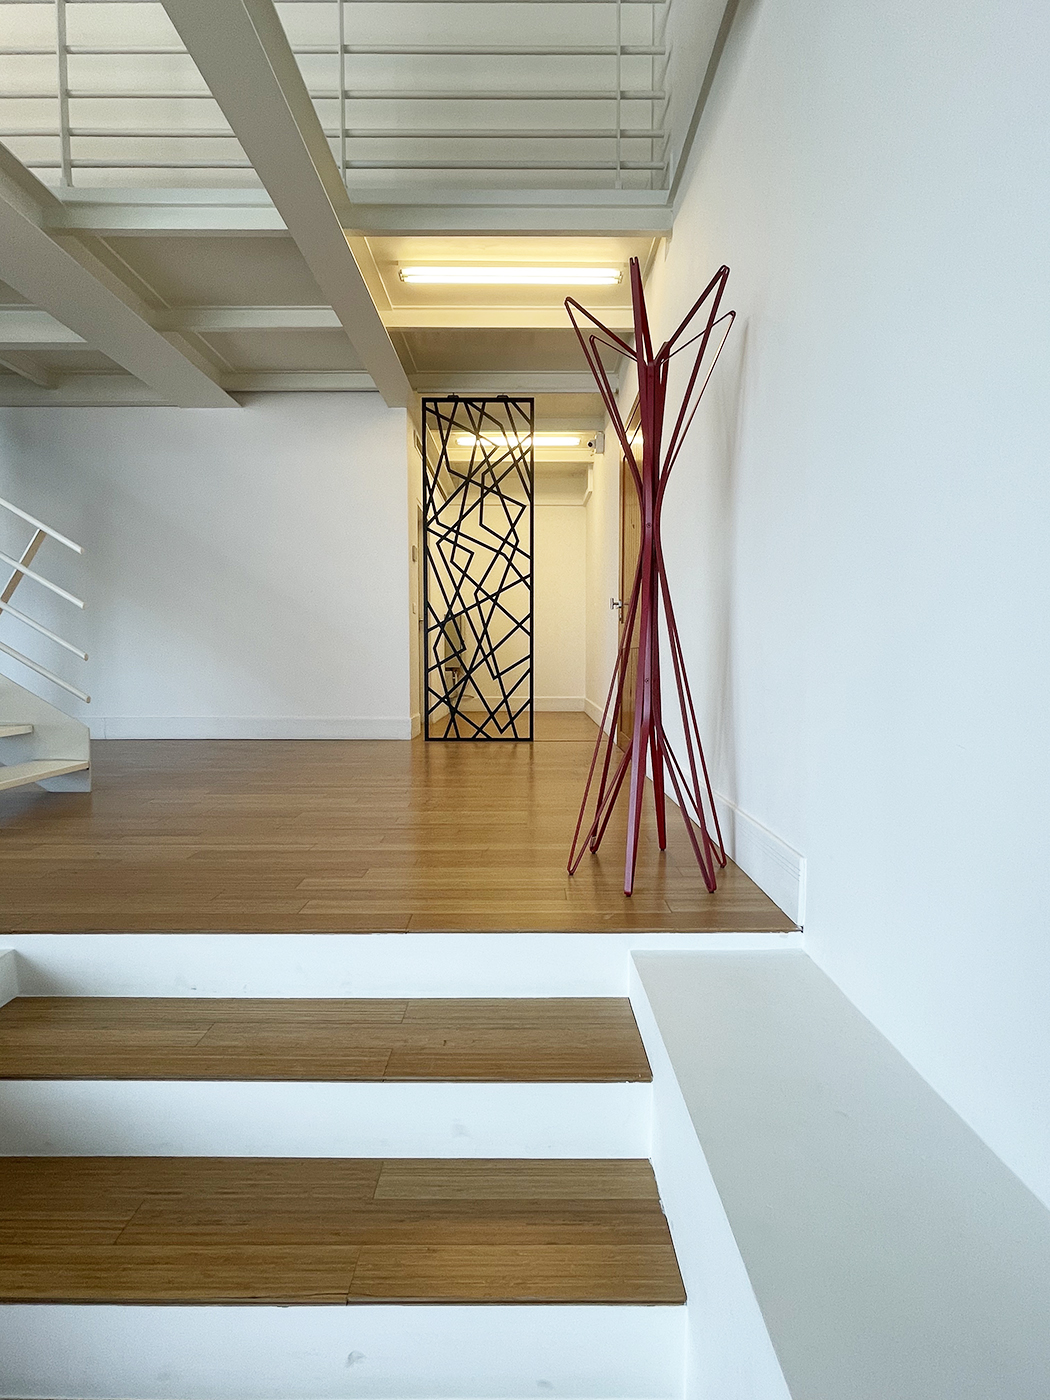 MDDM-Architects-Screen-Panel-furniture-product-design-steel-studio